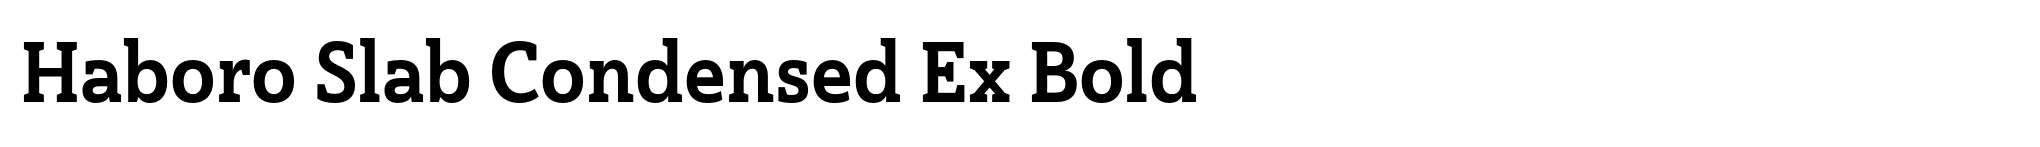 Haboro Slab Condensed Ex Bold image